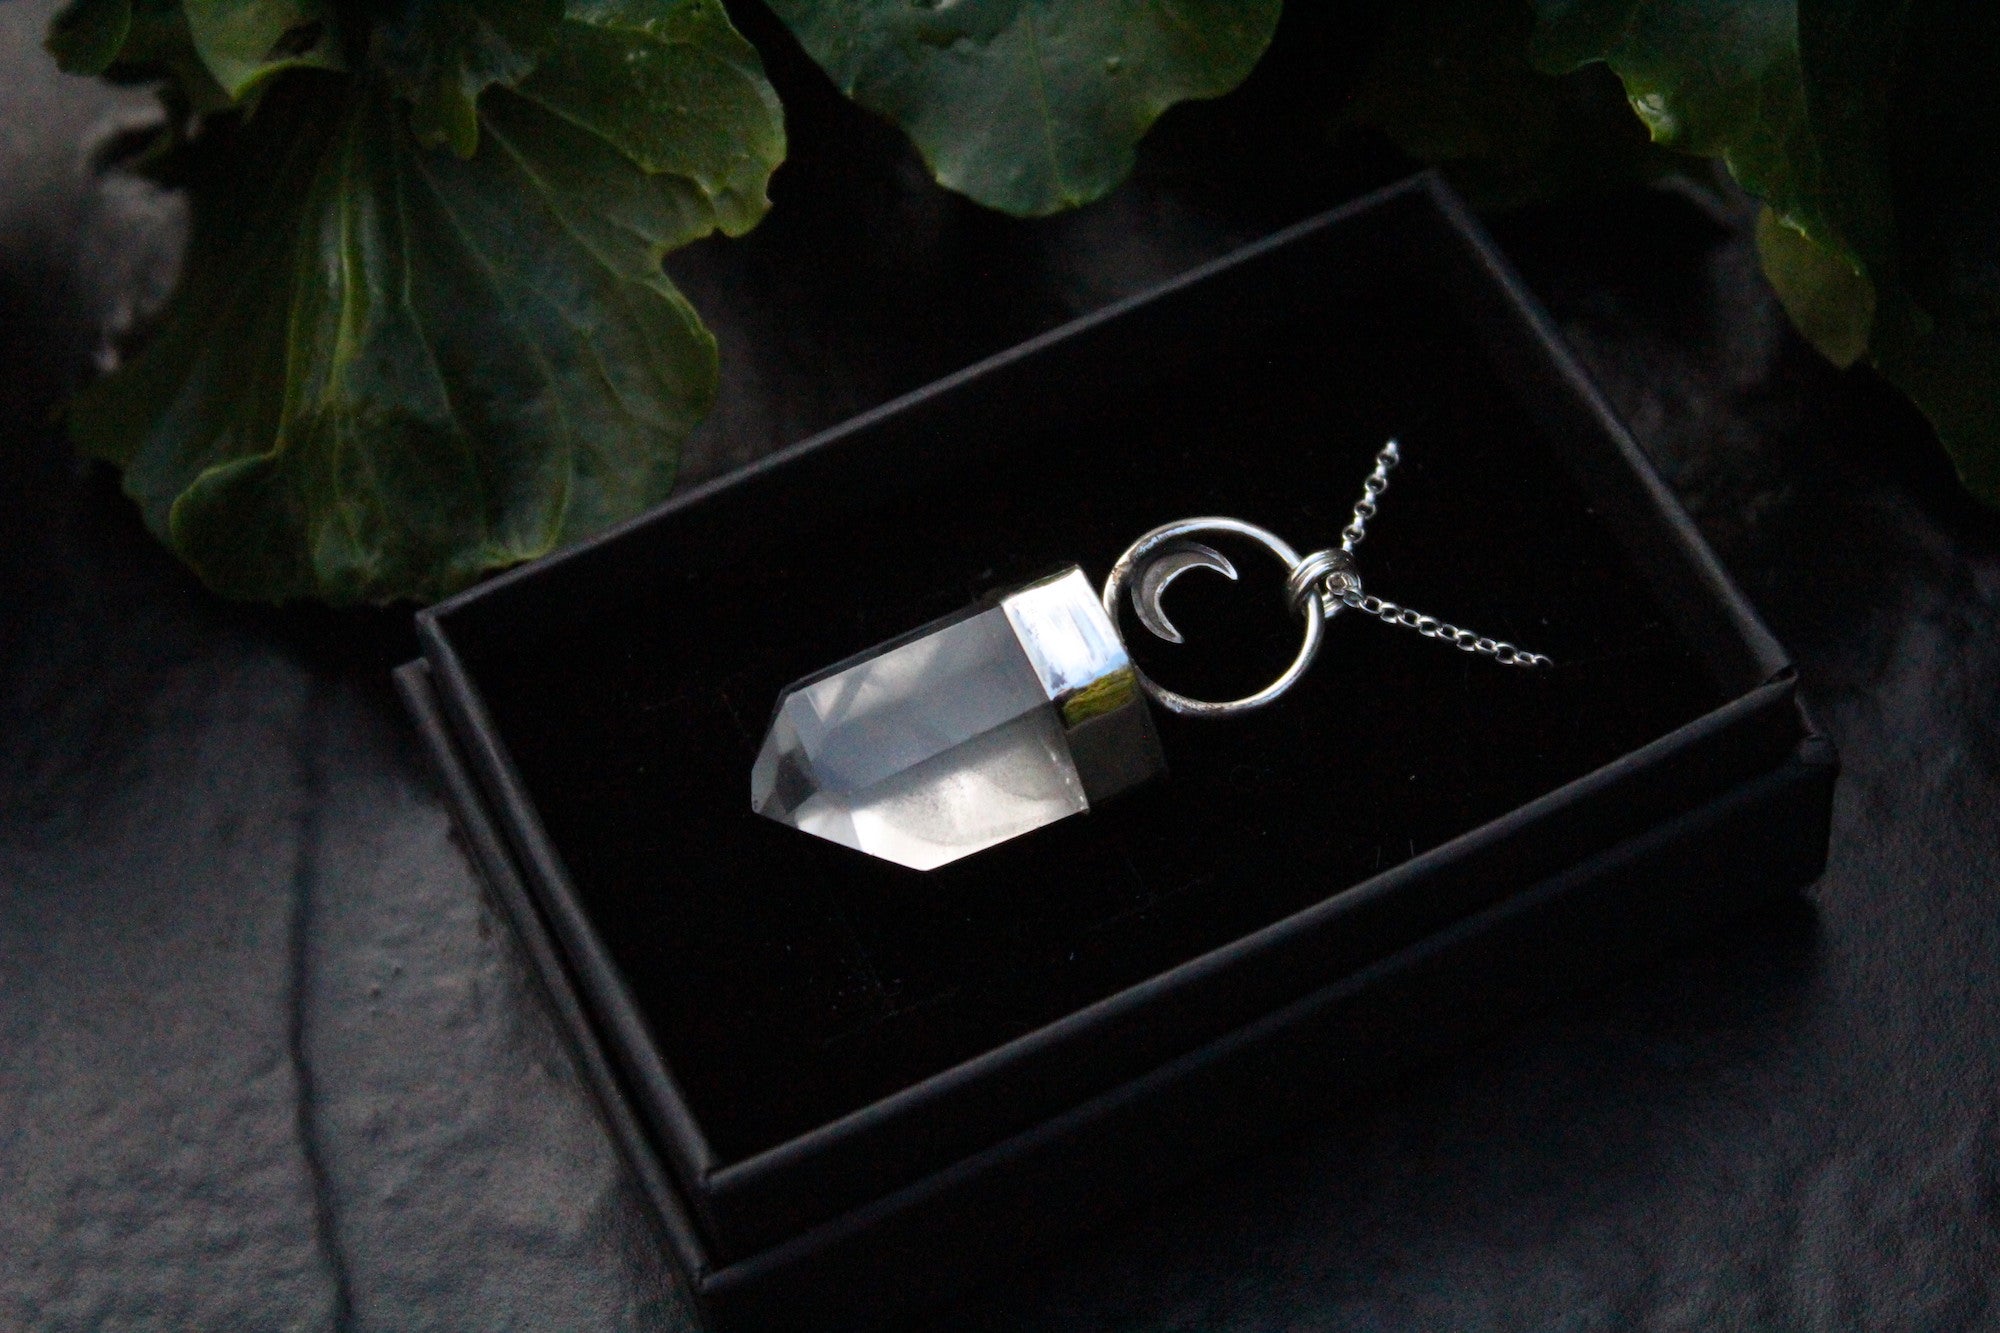 MOONLIGHT MIST Handmade Sterling Silver Necklace with Phantom Quartz